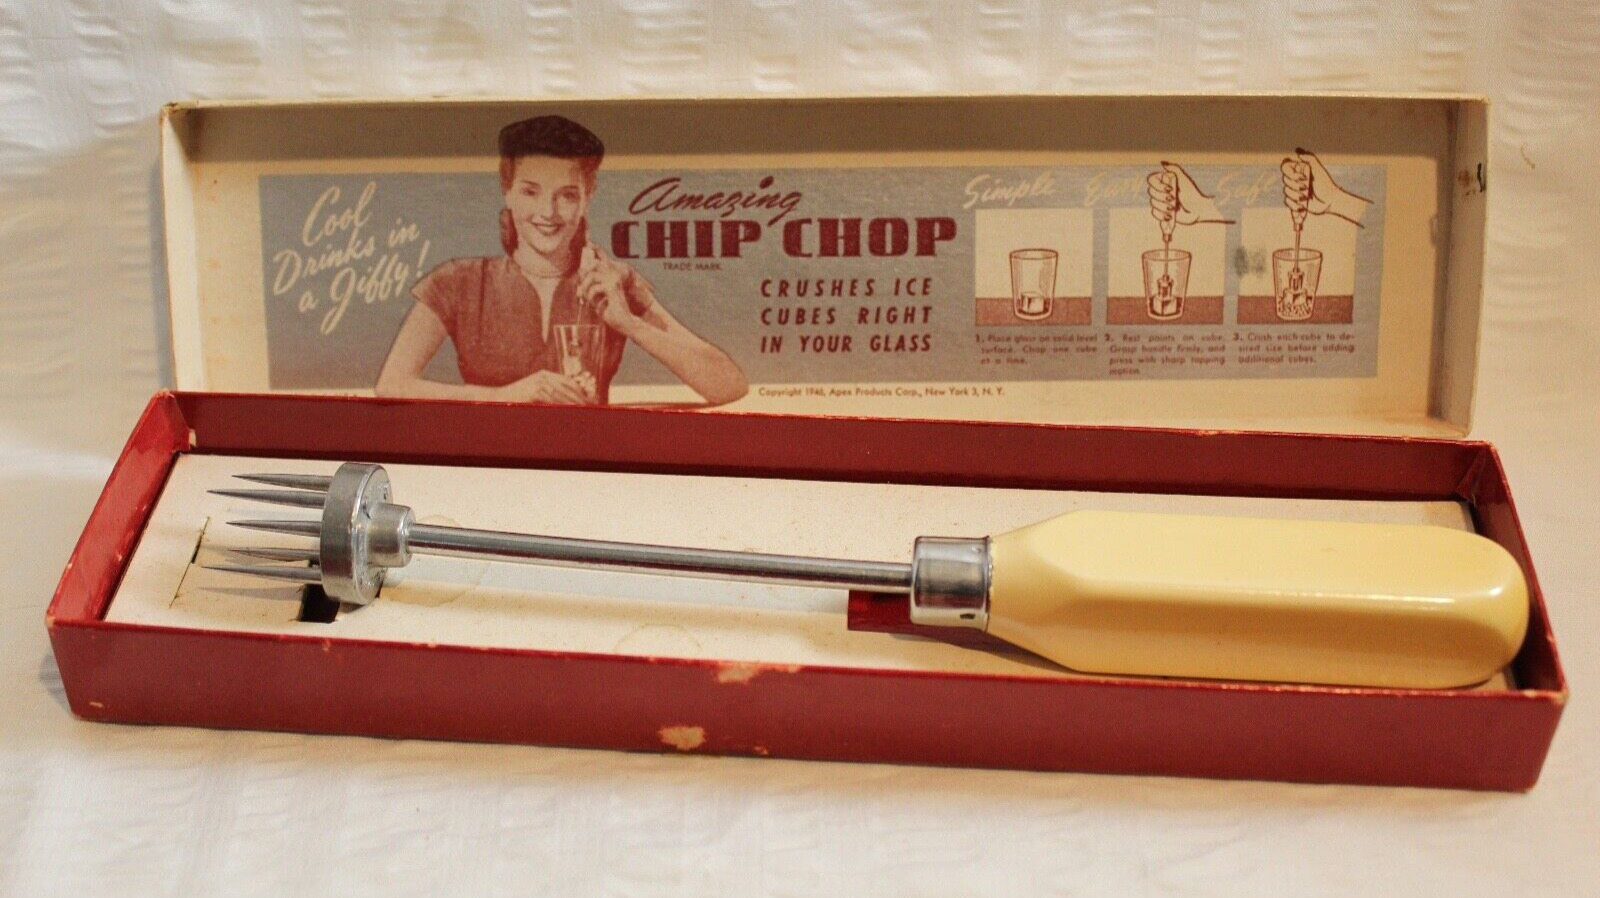 Vintage Chip Chop 1946 Ice crusher Pick Chopper Spring Action - Original Box